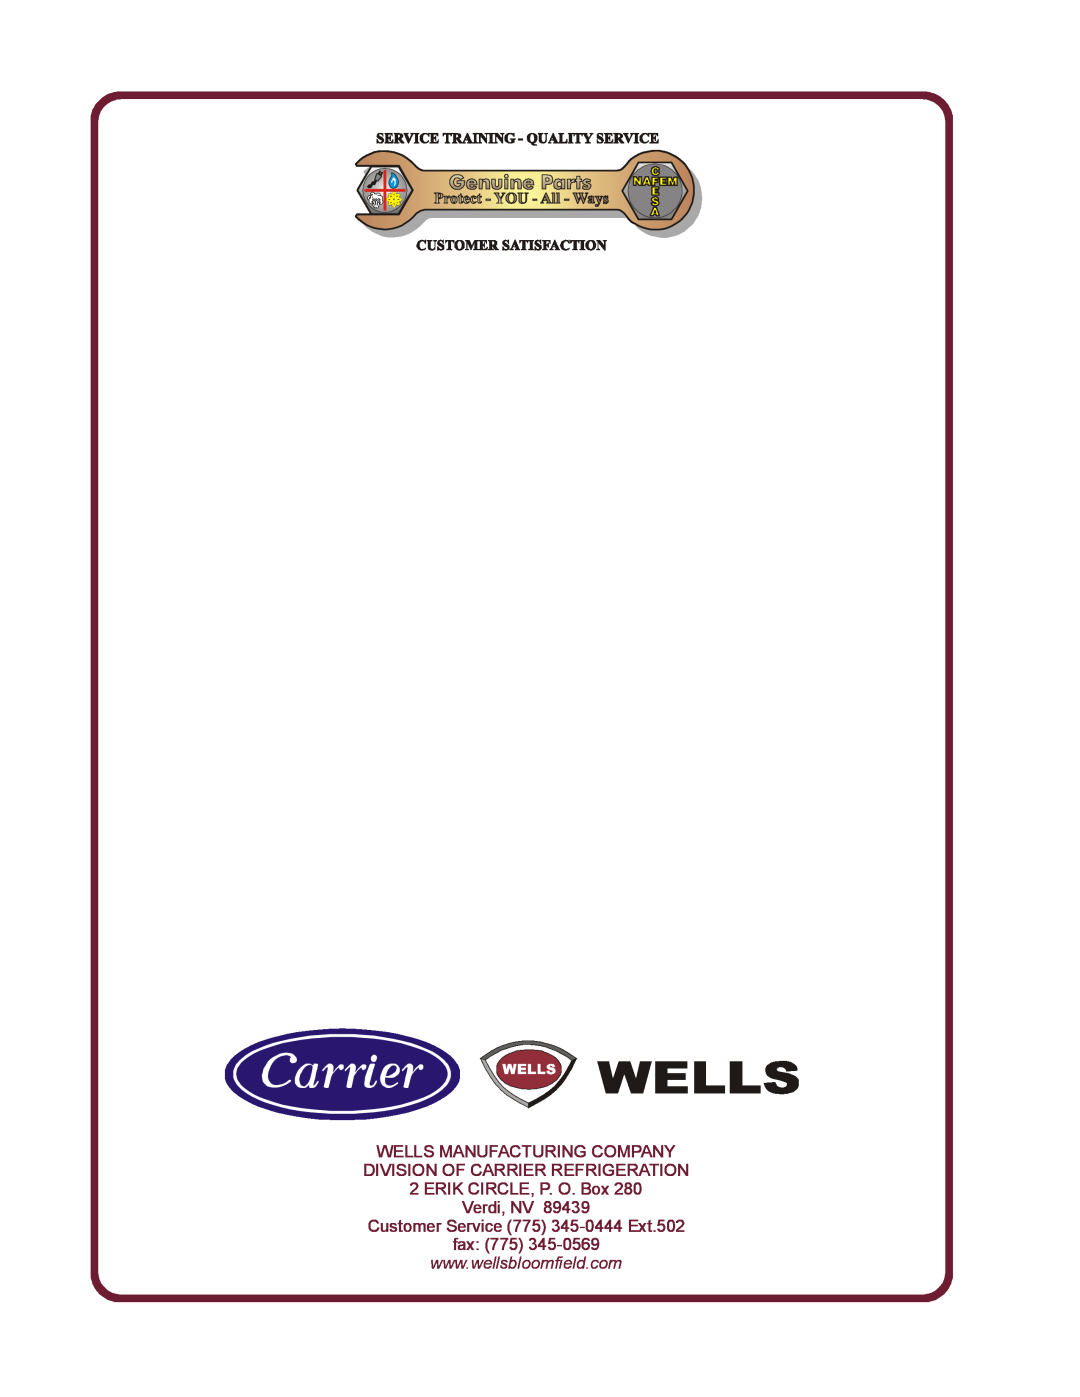 Wells F-886 Wells Manufacturing Company Division Of Carrier Refrigeration, ERIK CIRCLE, P. O. Box Verdi, NV 